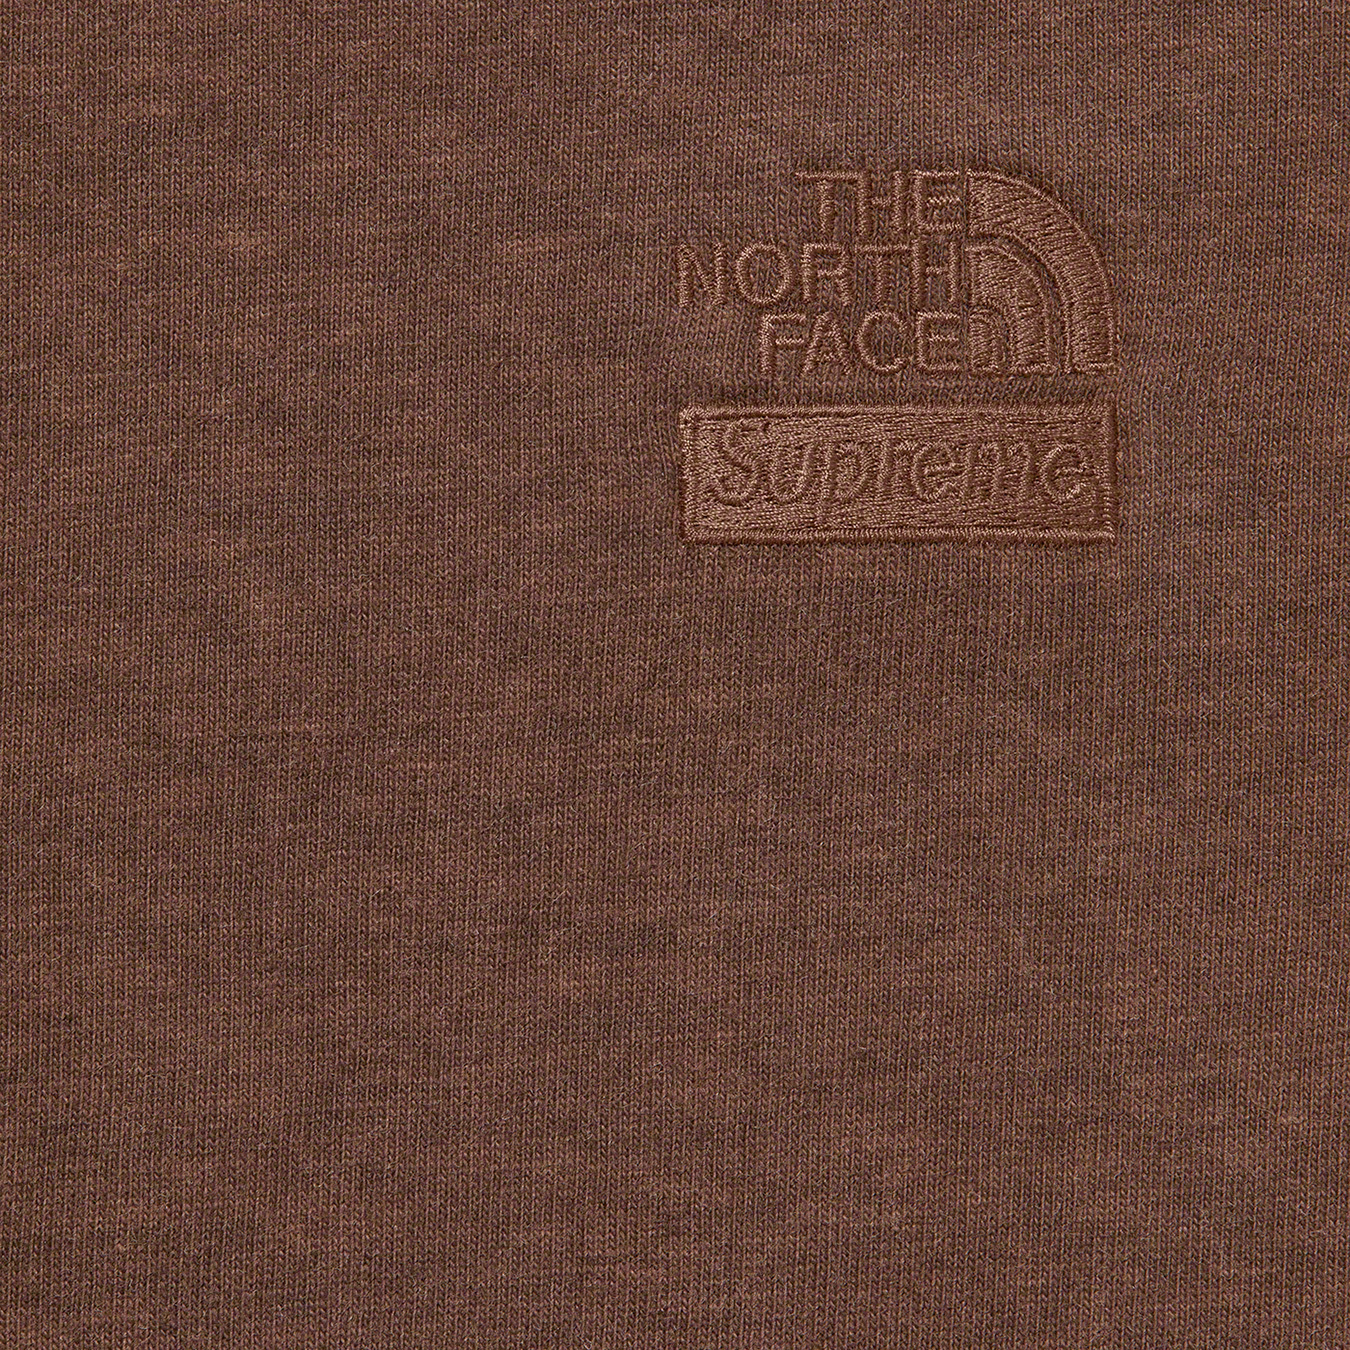 Supreme®/The North Face® Pigment Printed L/S Top